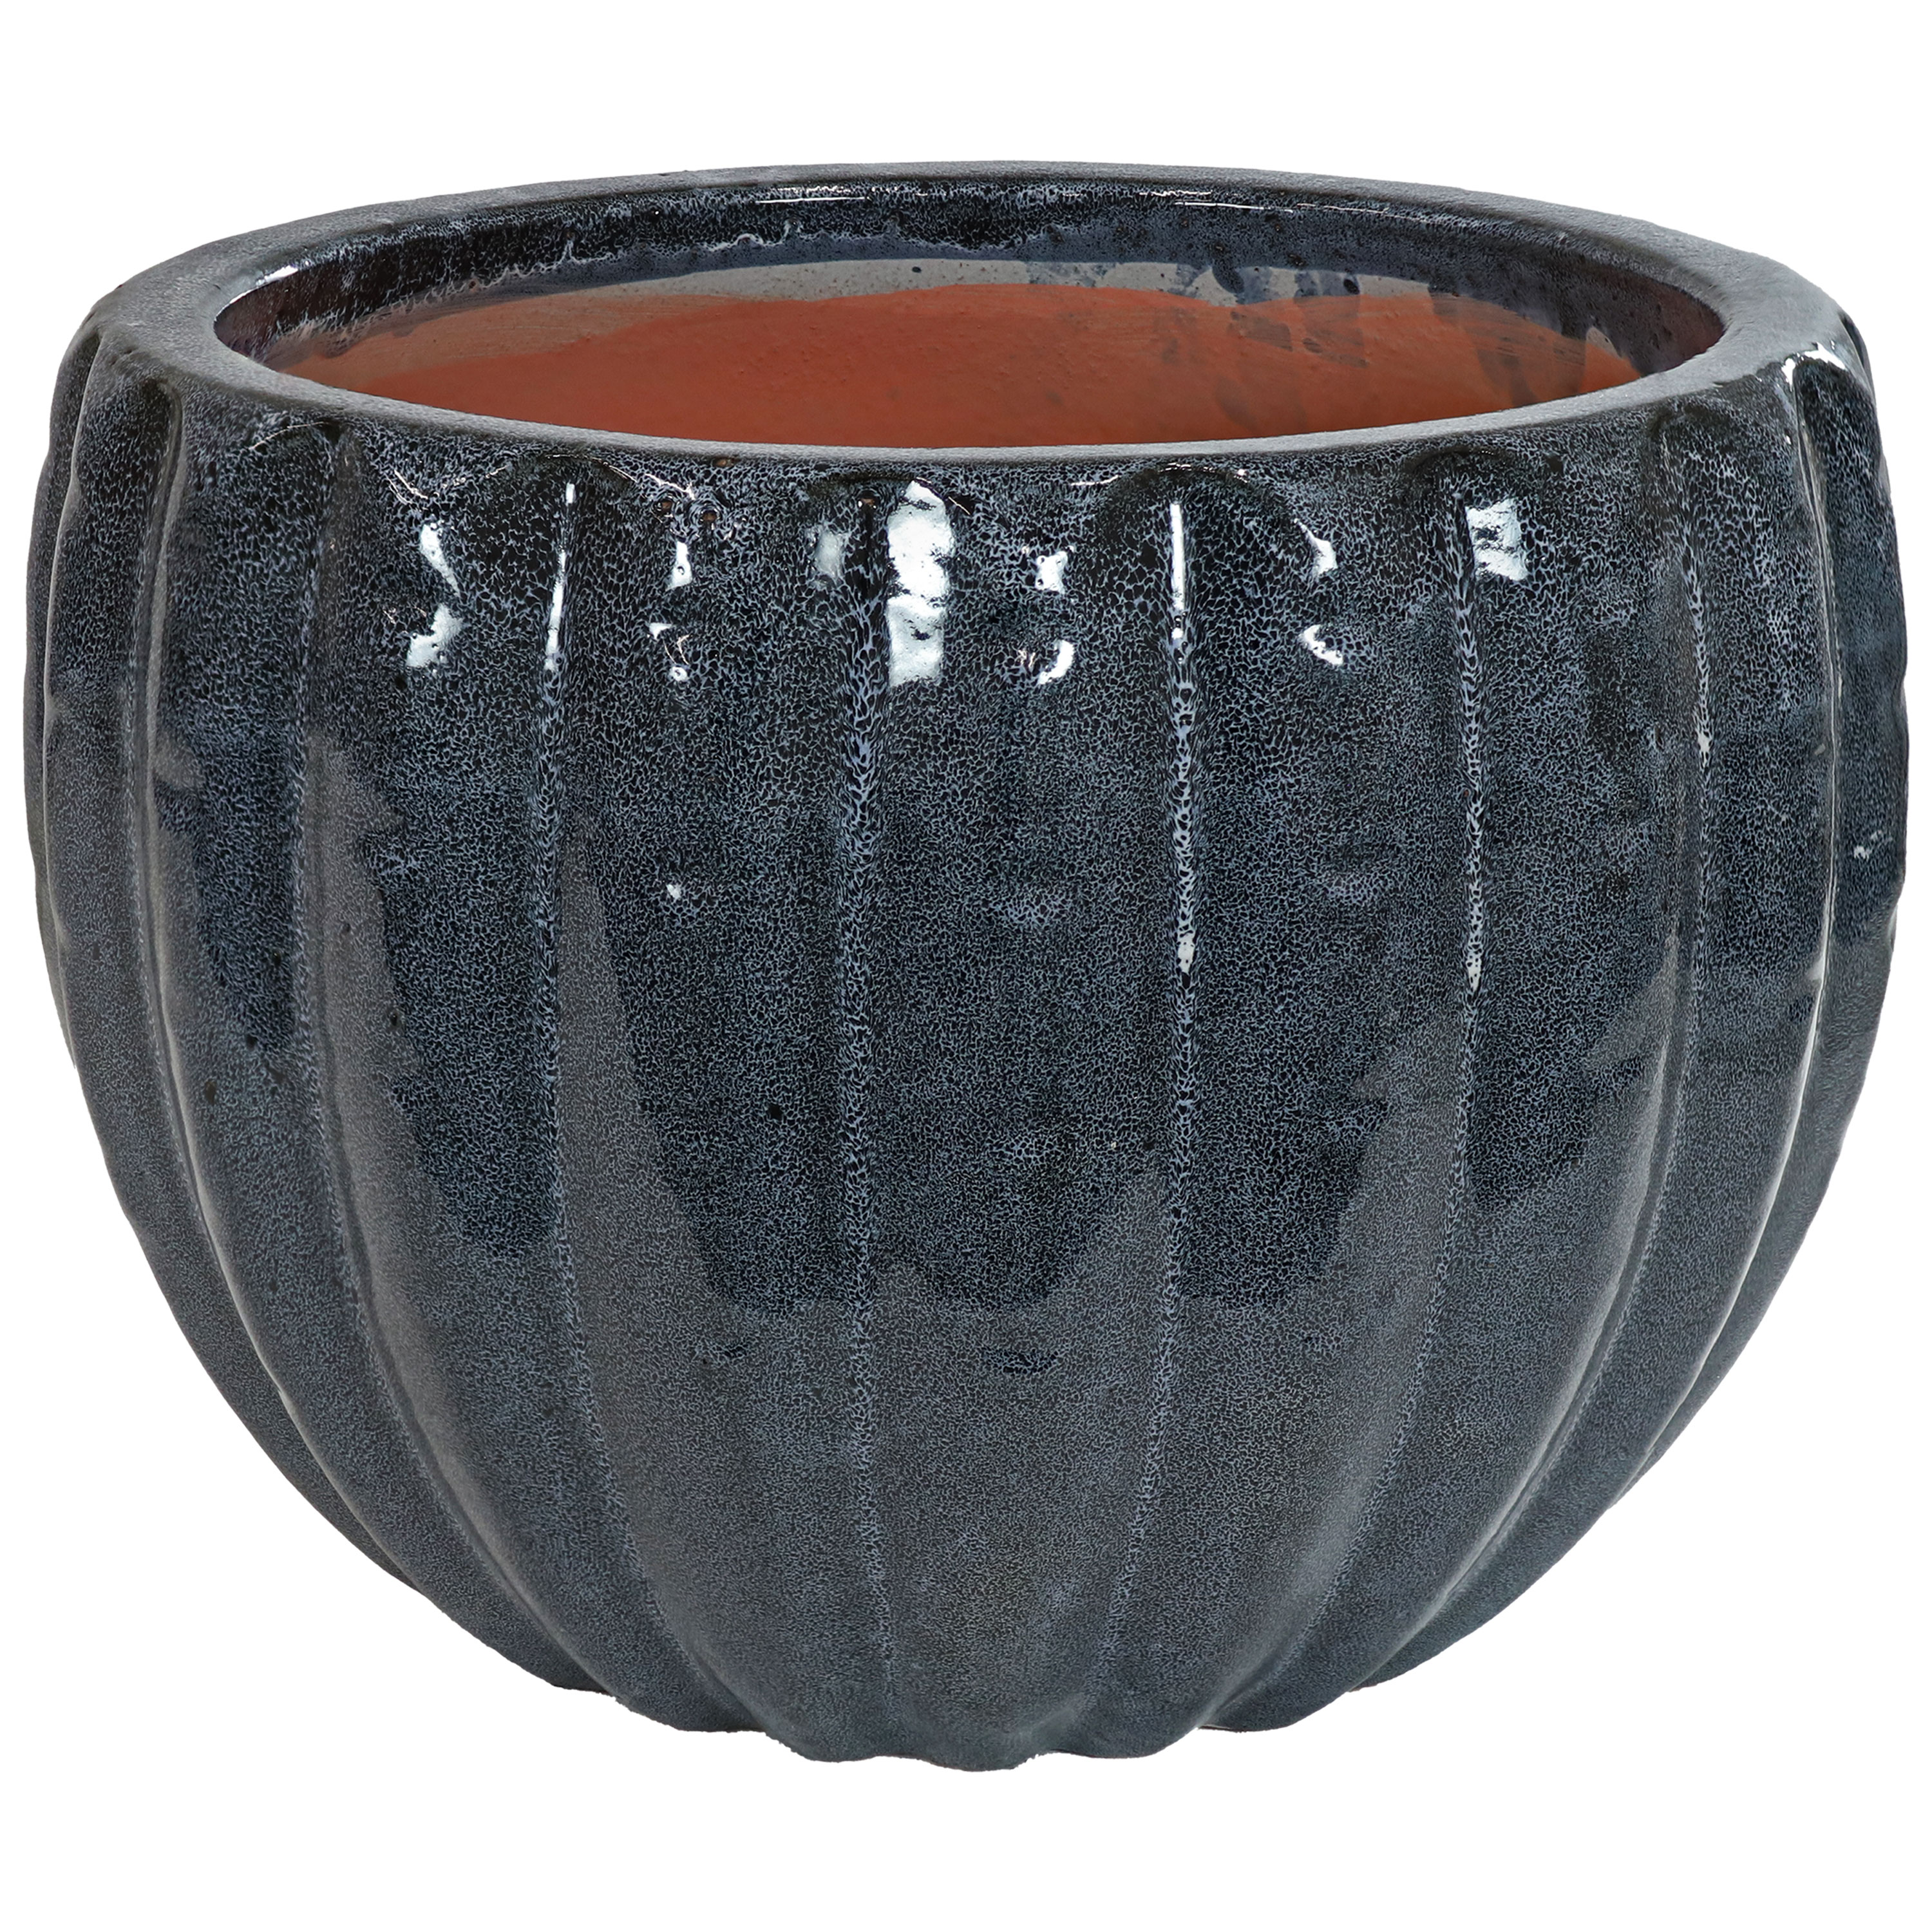 13.5" Fluted Ceramic Planter - Black Mist